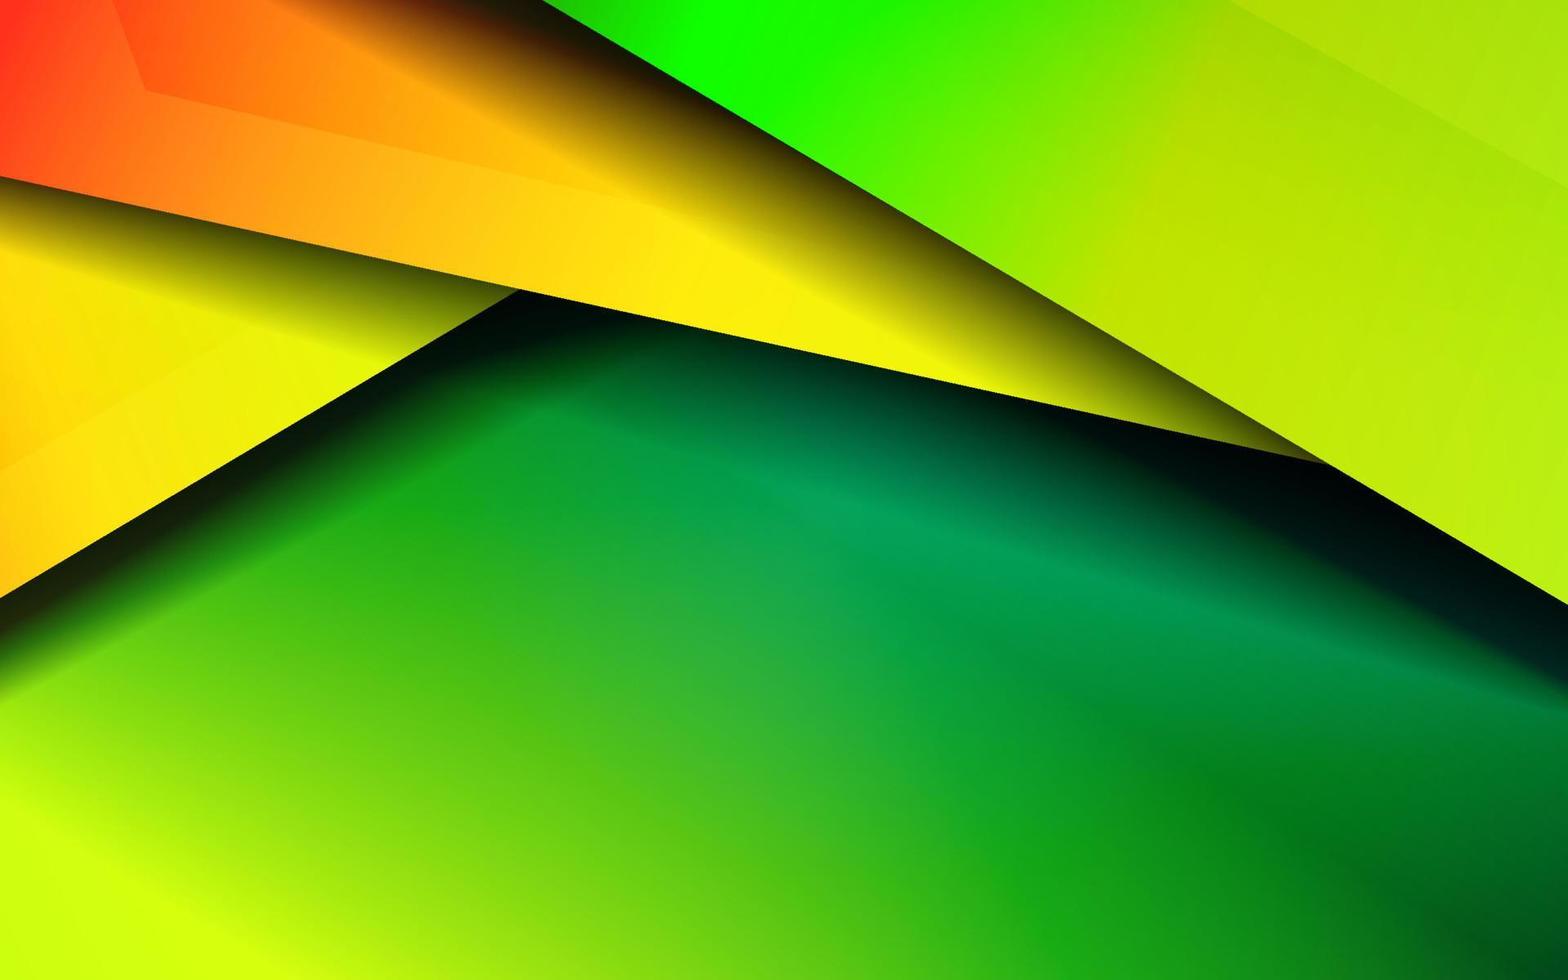 abstract grunge structuur kleurrijk achtergrond vector